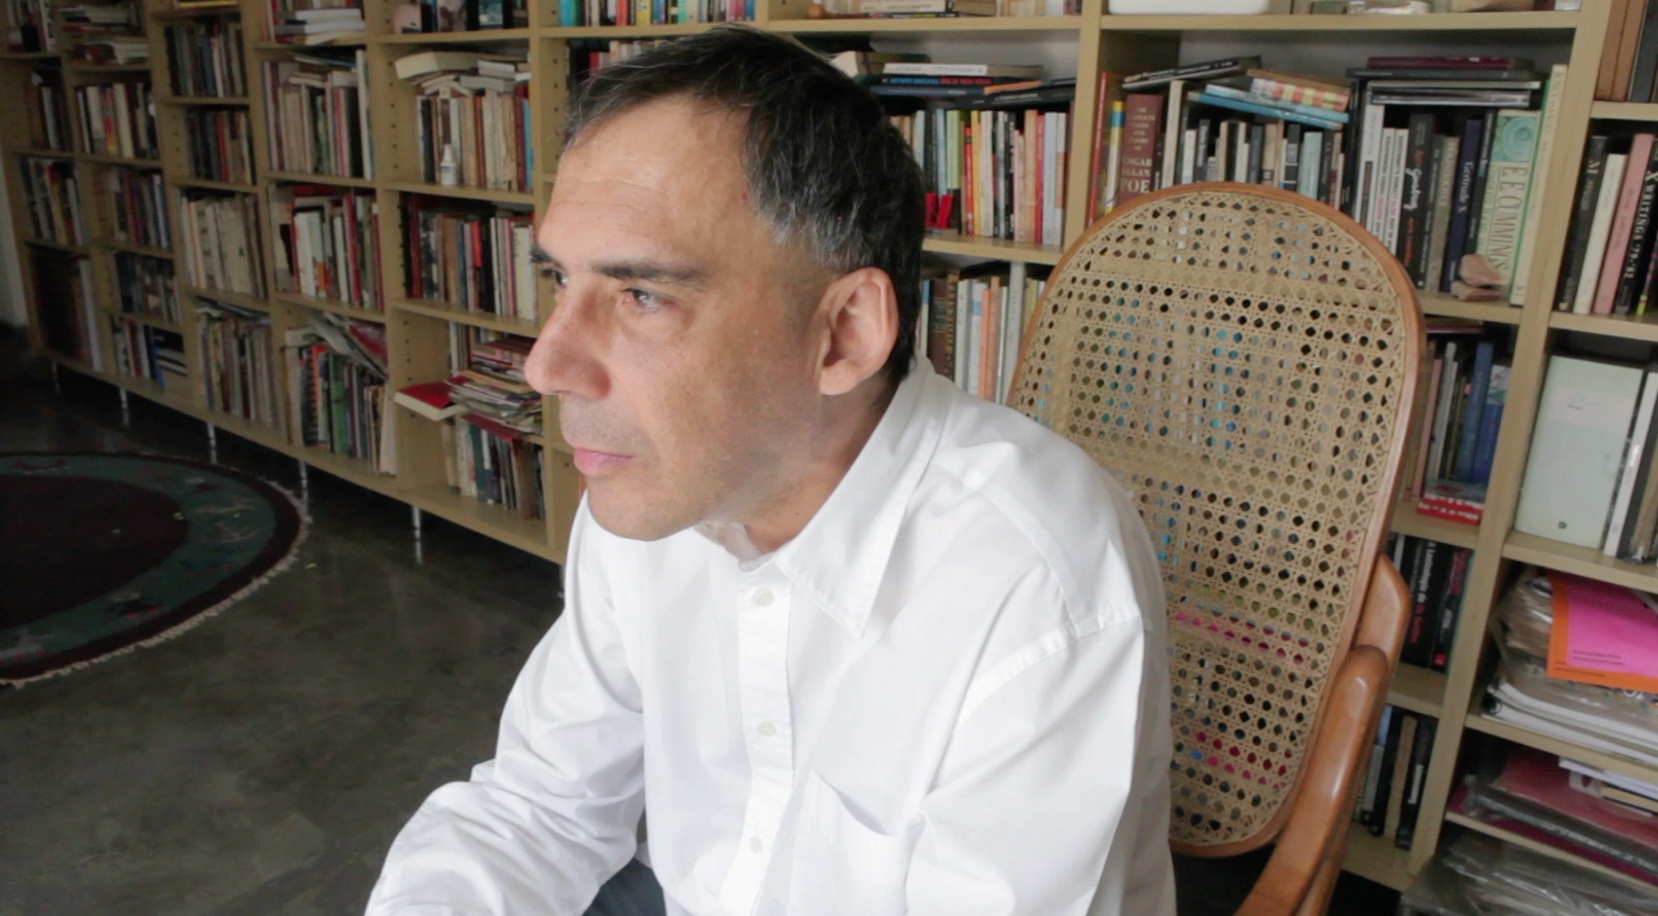 Arnaldo Antunes fala sobre novo disco, literatura e política